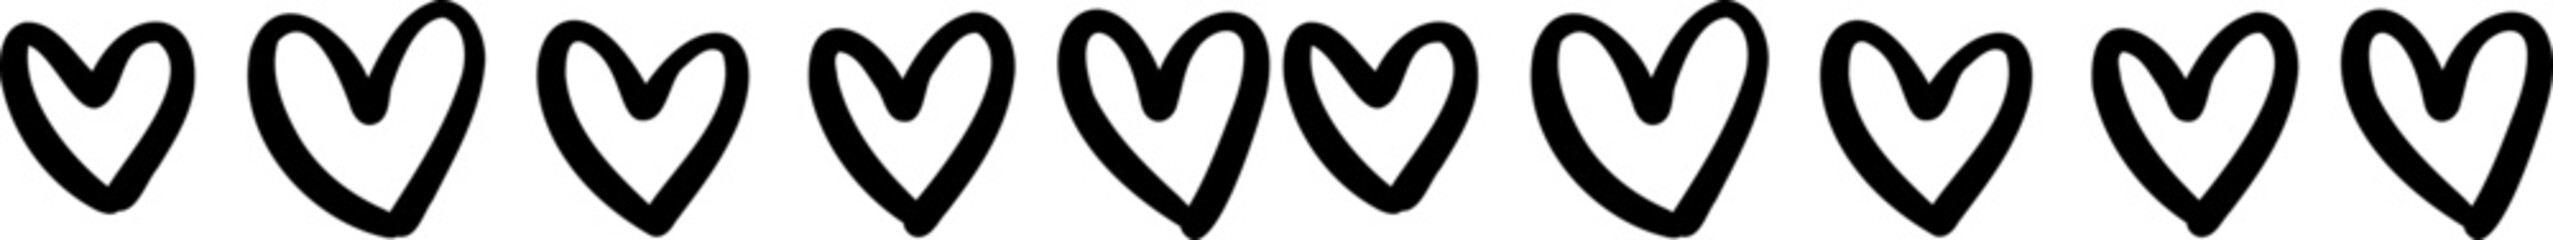 Cute doodle simple heart shape line divider border frame hand drawing